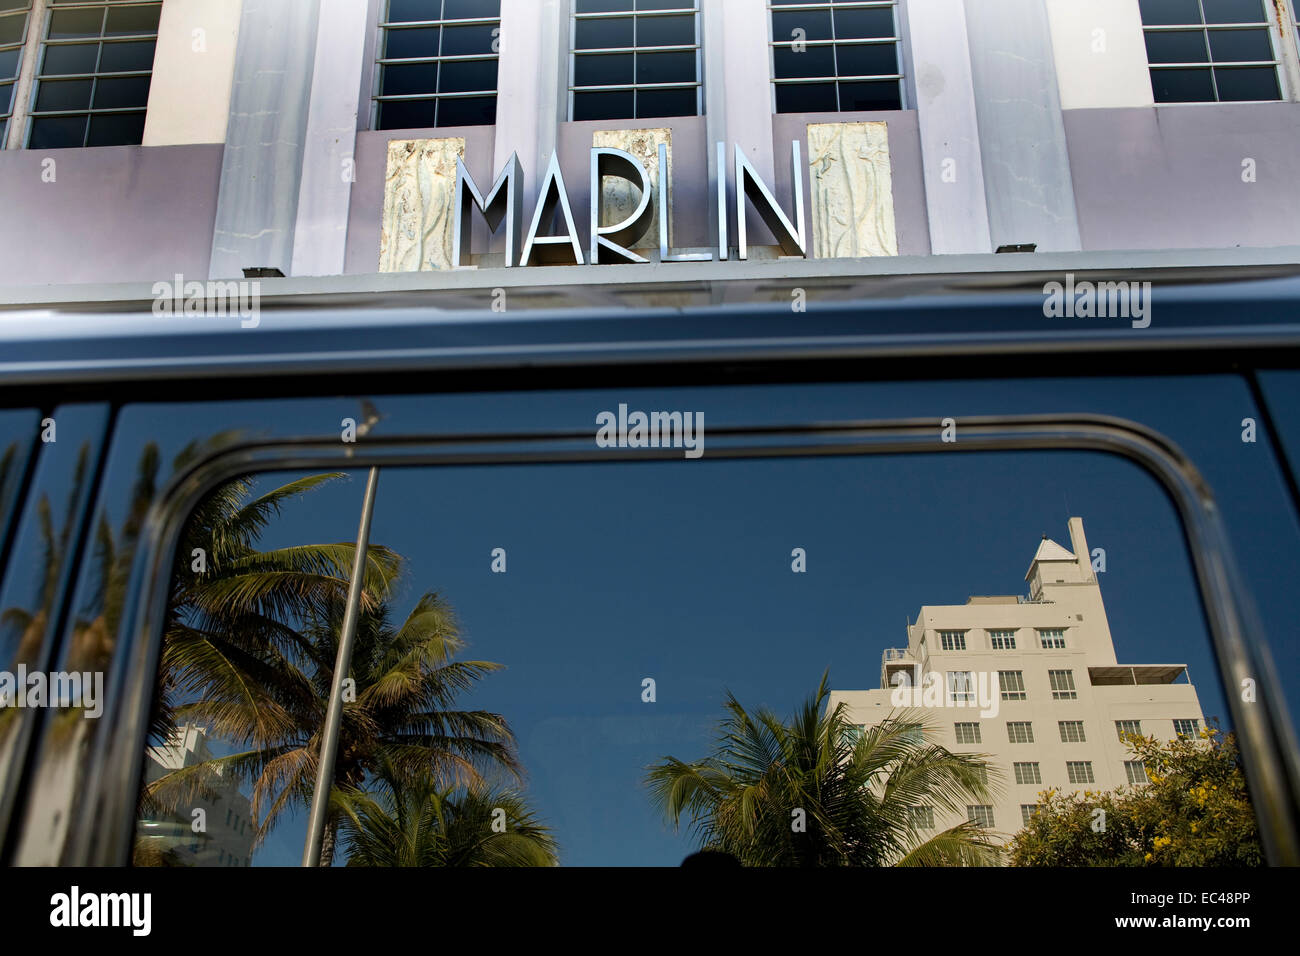 Marlin Hotel with car window reflection, Southbeach, Miami Beach, Florida, USA Stock Photo